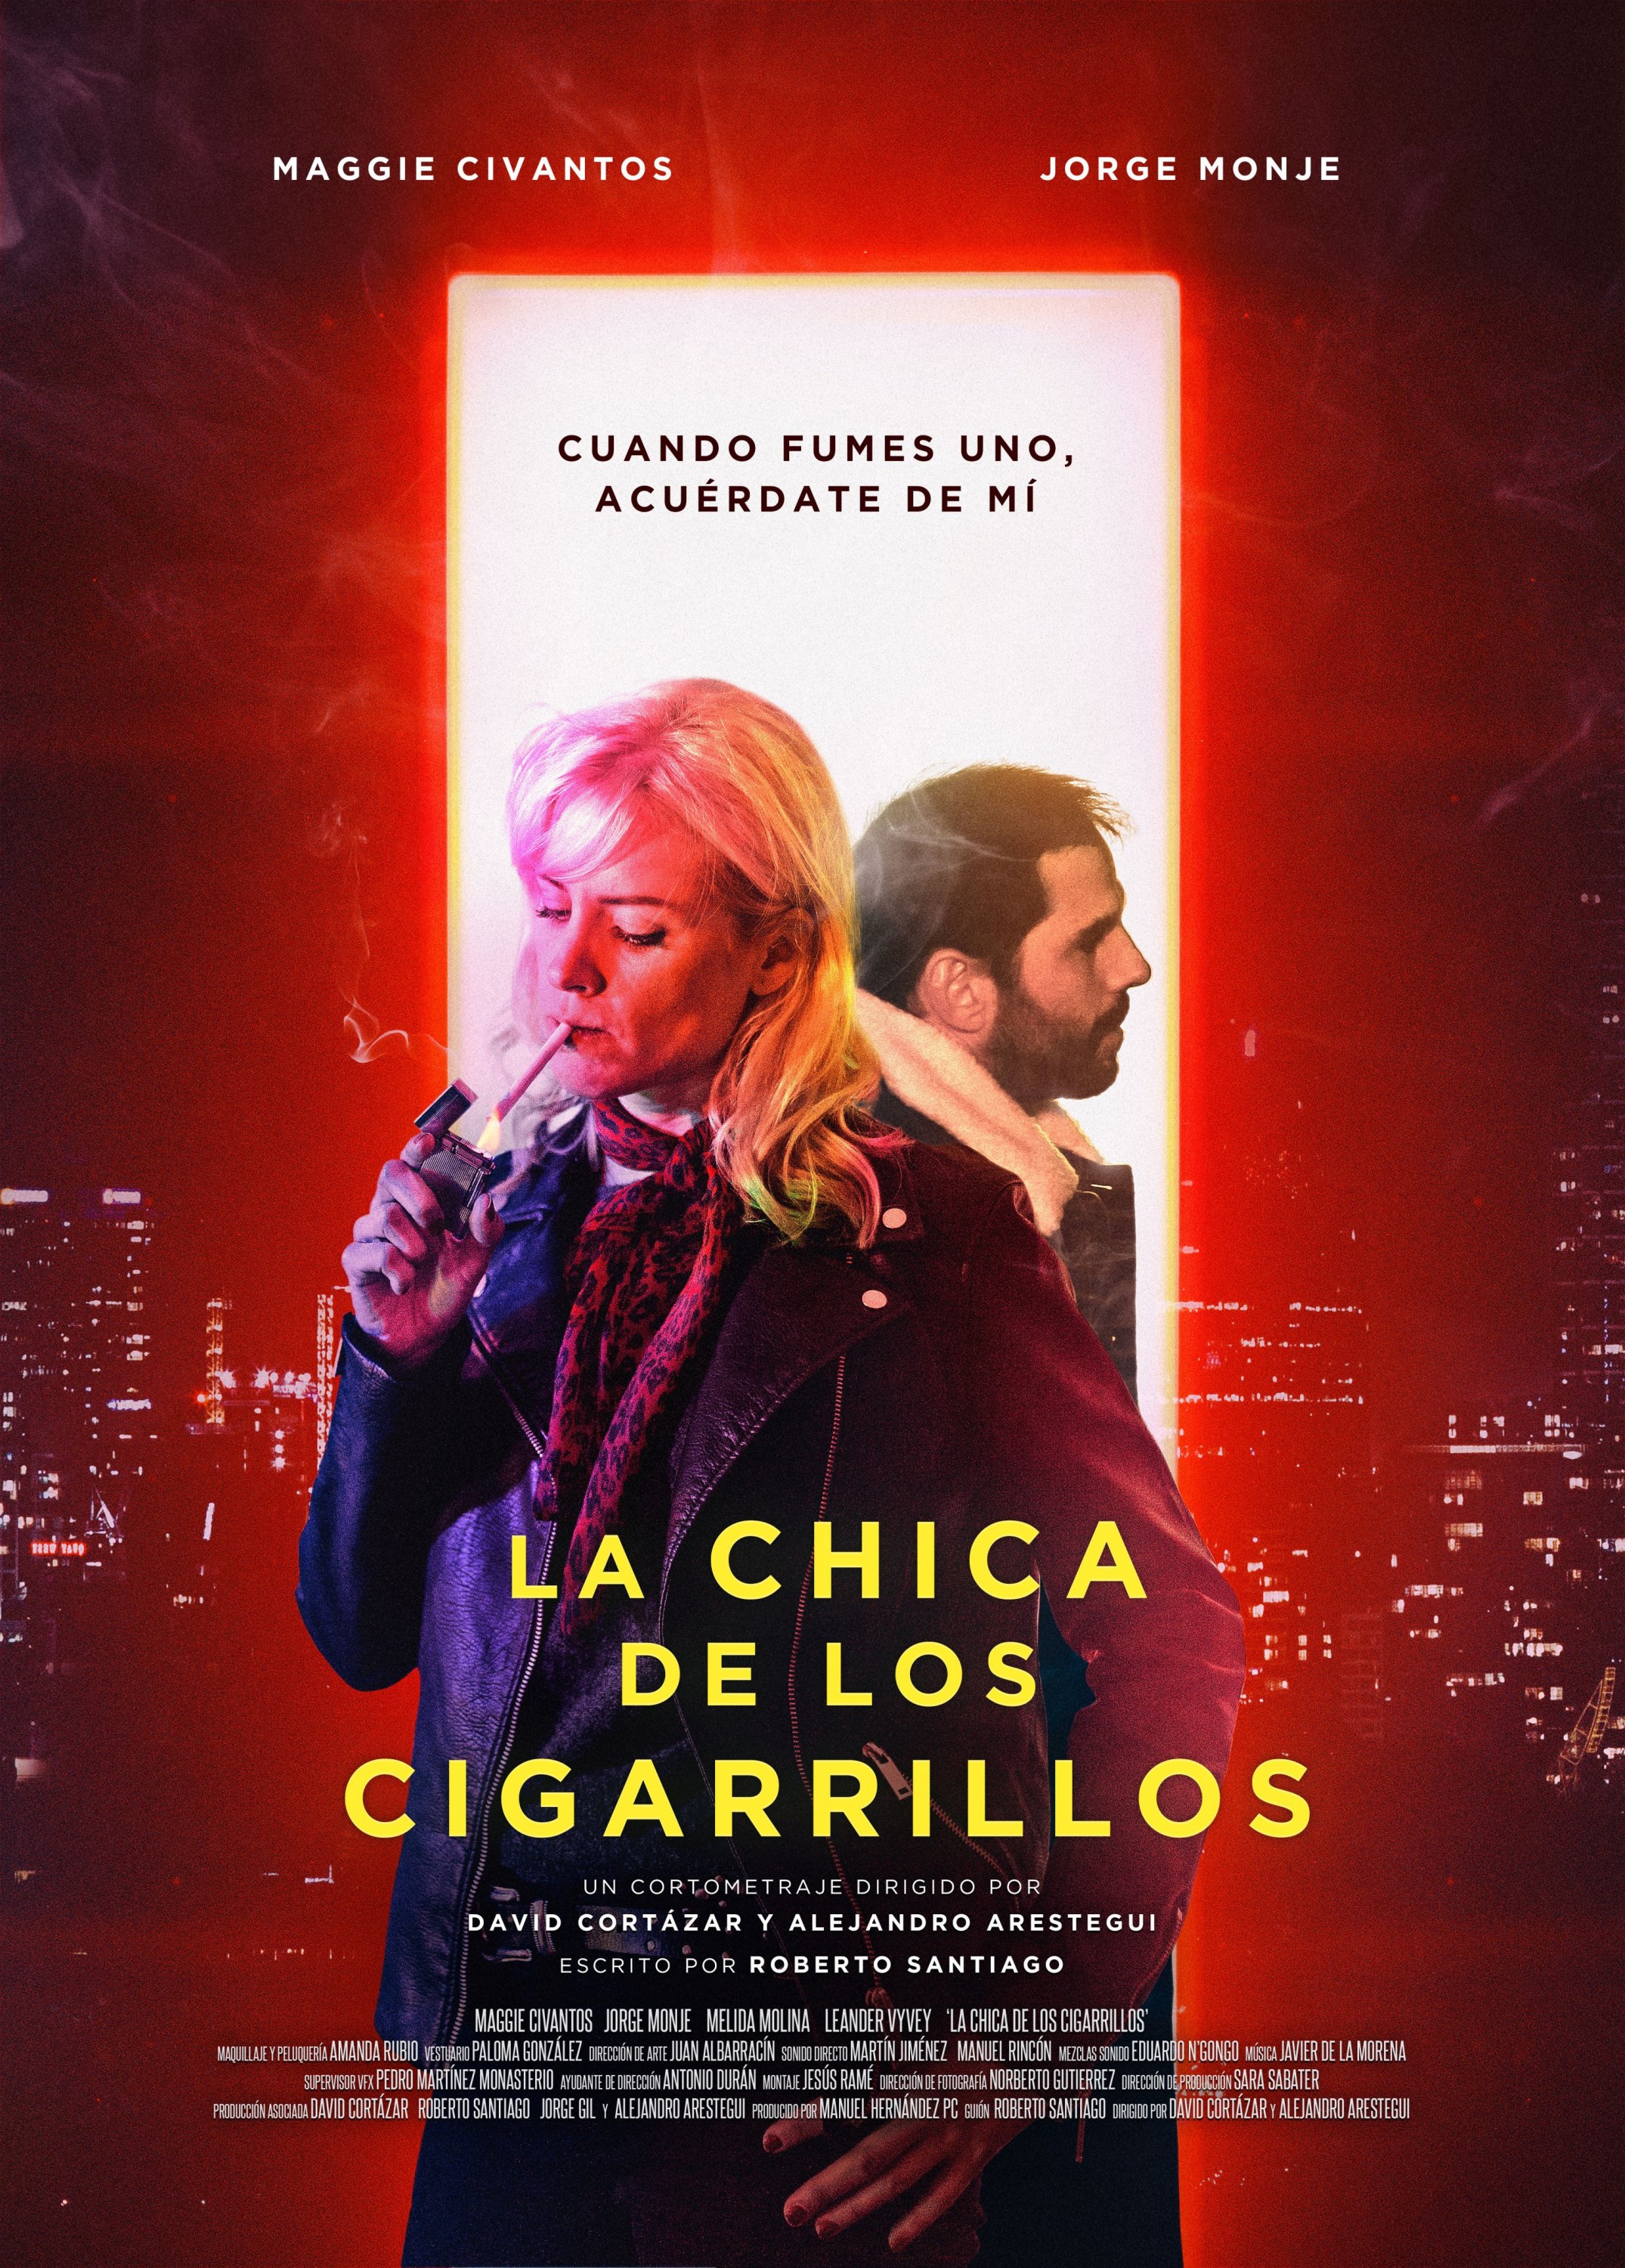 Mega Sized Movie Poster Image for La chica de los cigarrillos